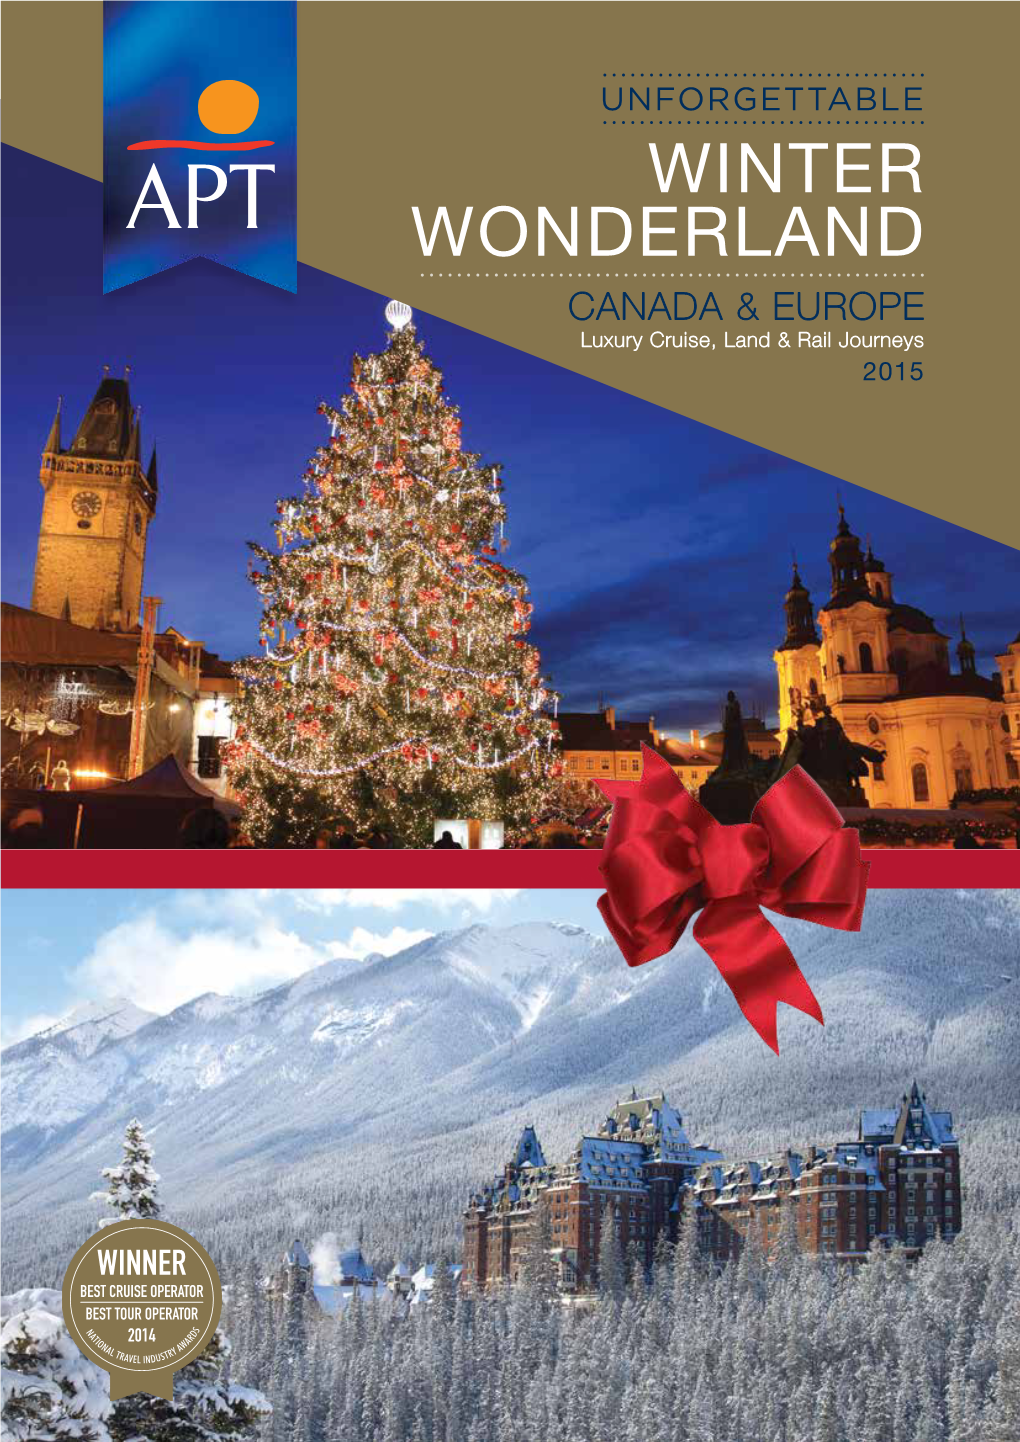 WINTER WONDERLAND CANADA & EUROPE Luxury Cruise, Land & Rail Journeys 2015 Welcome to Winter Wonderland